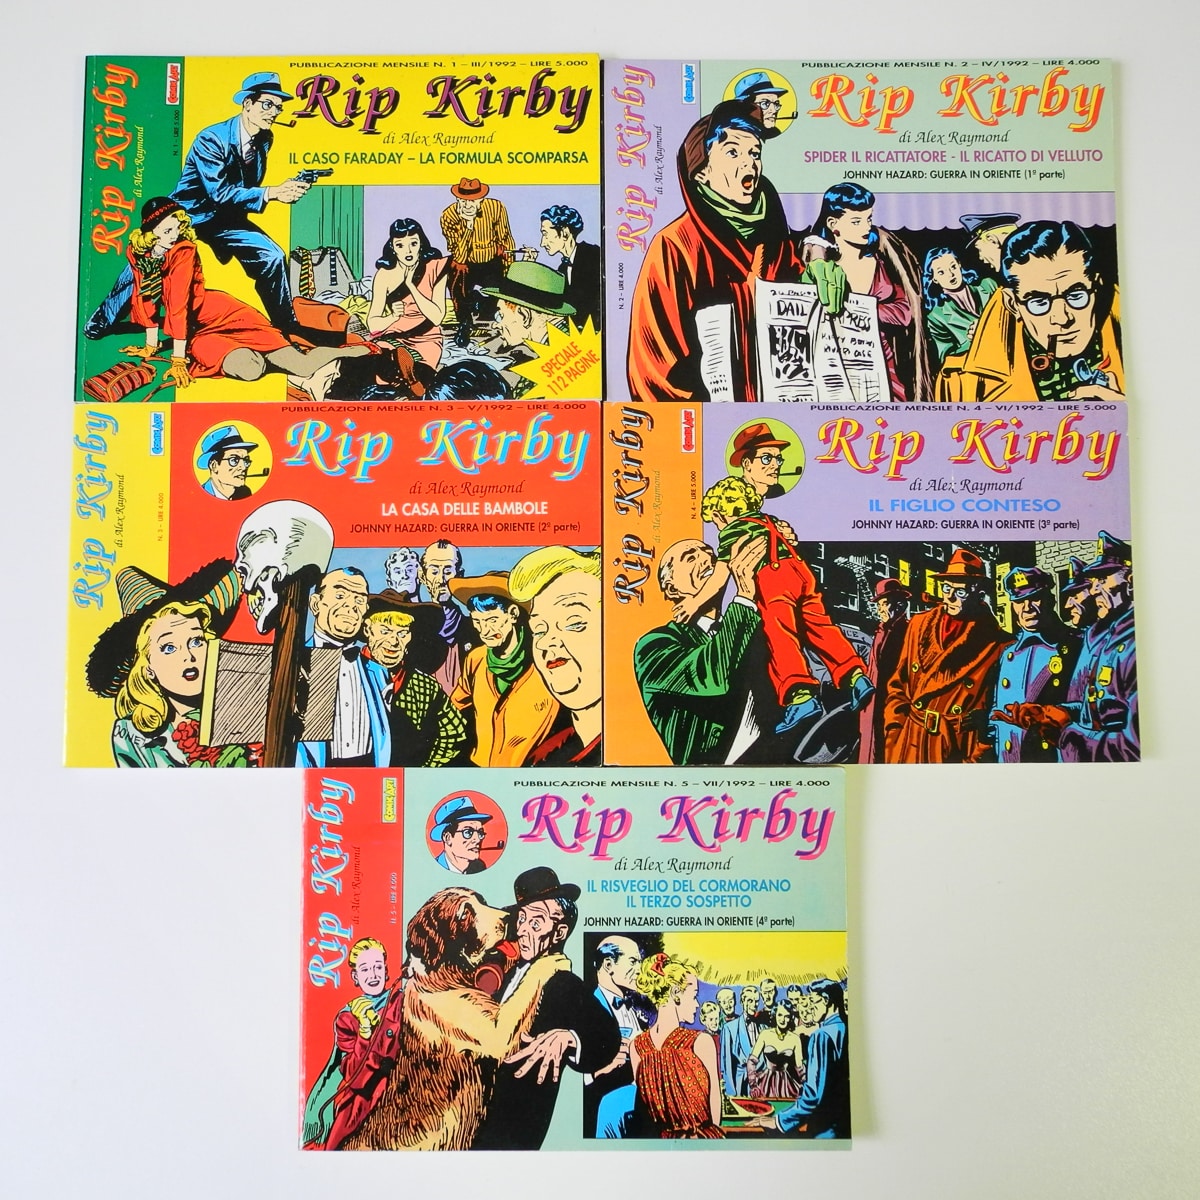 Rip Kirby n. 1-5 edizioni Comic Art